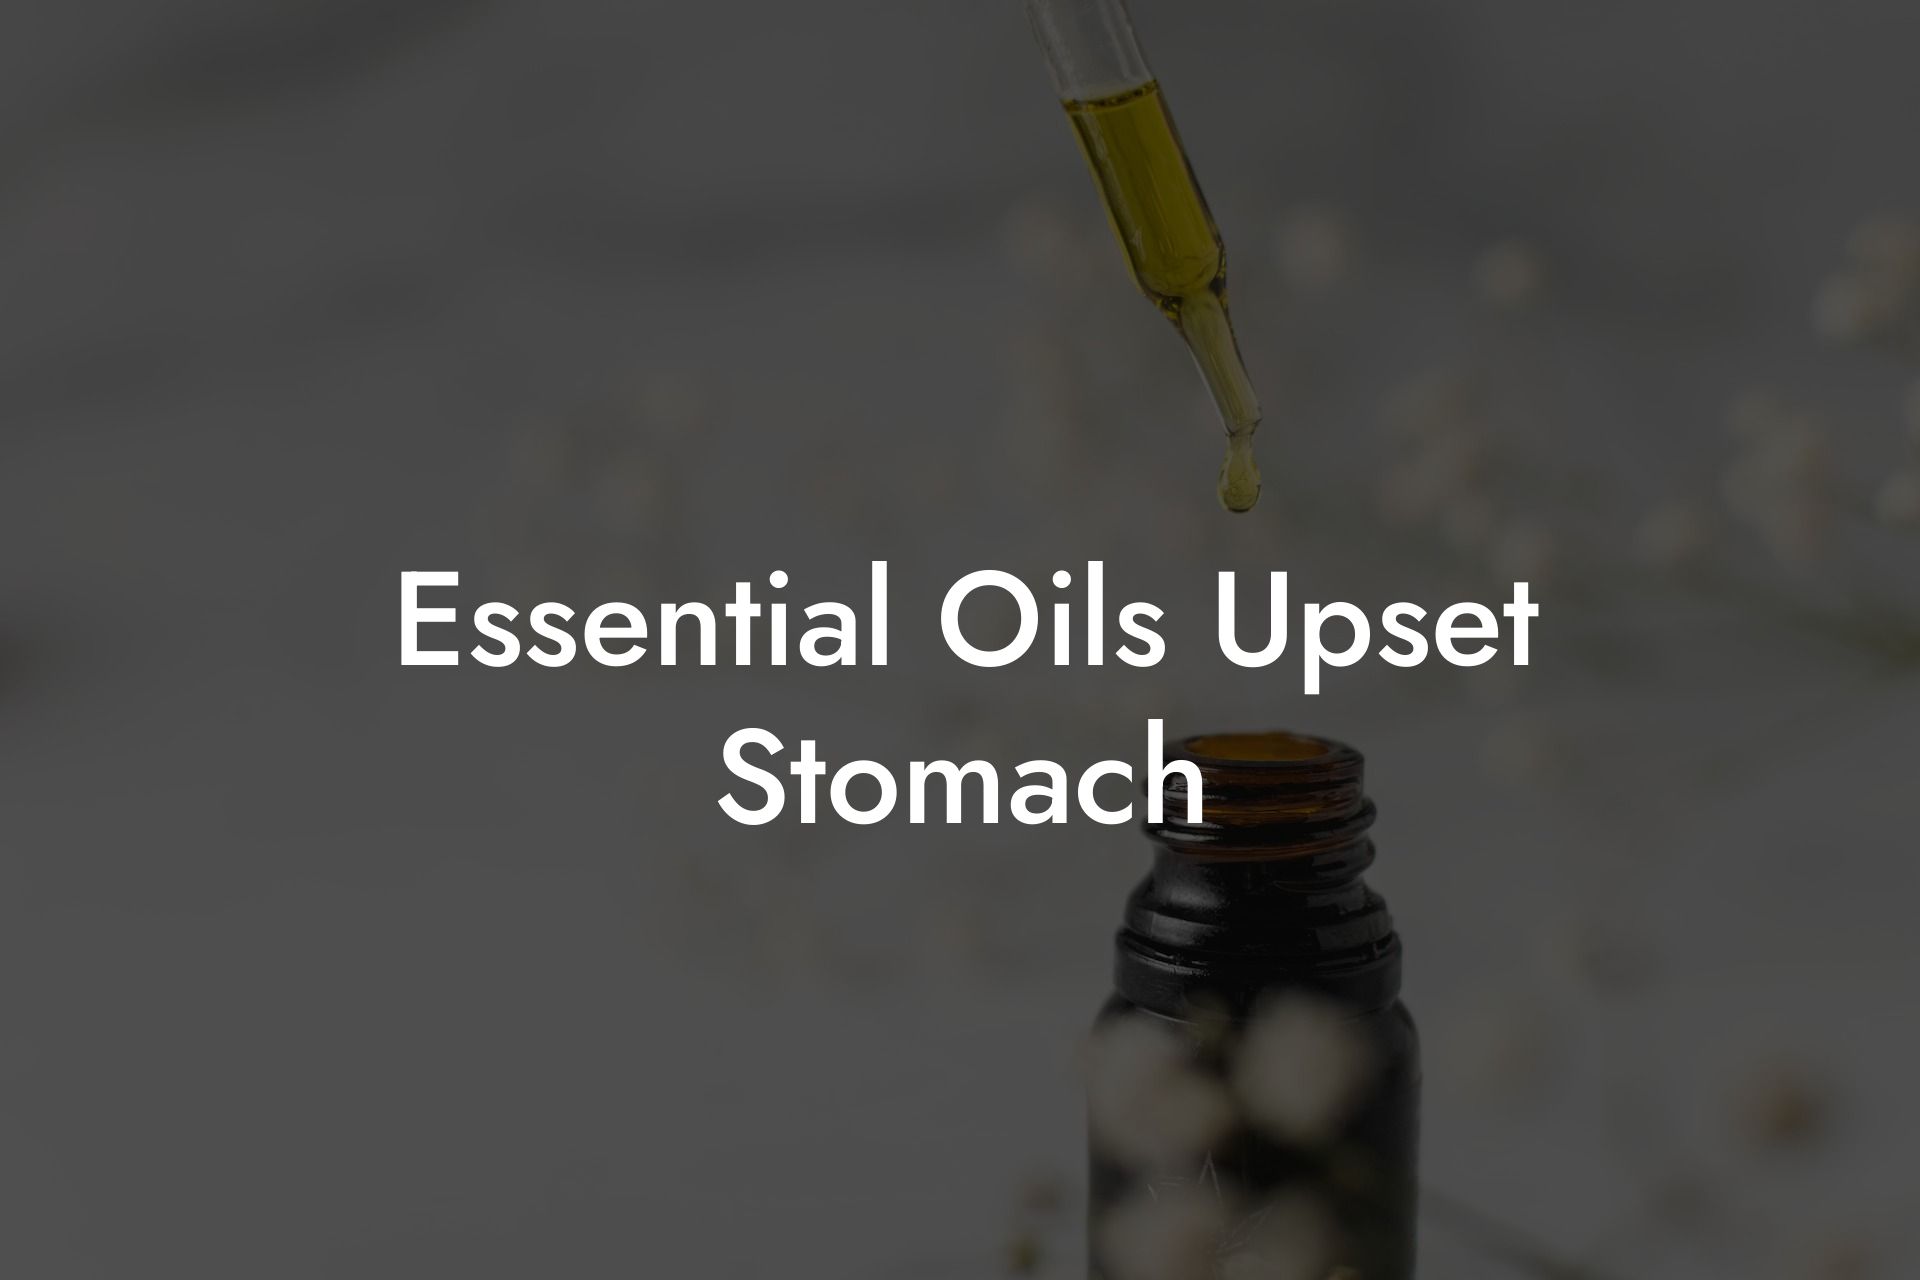 Essential Oils Upset Stomach